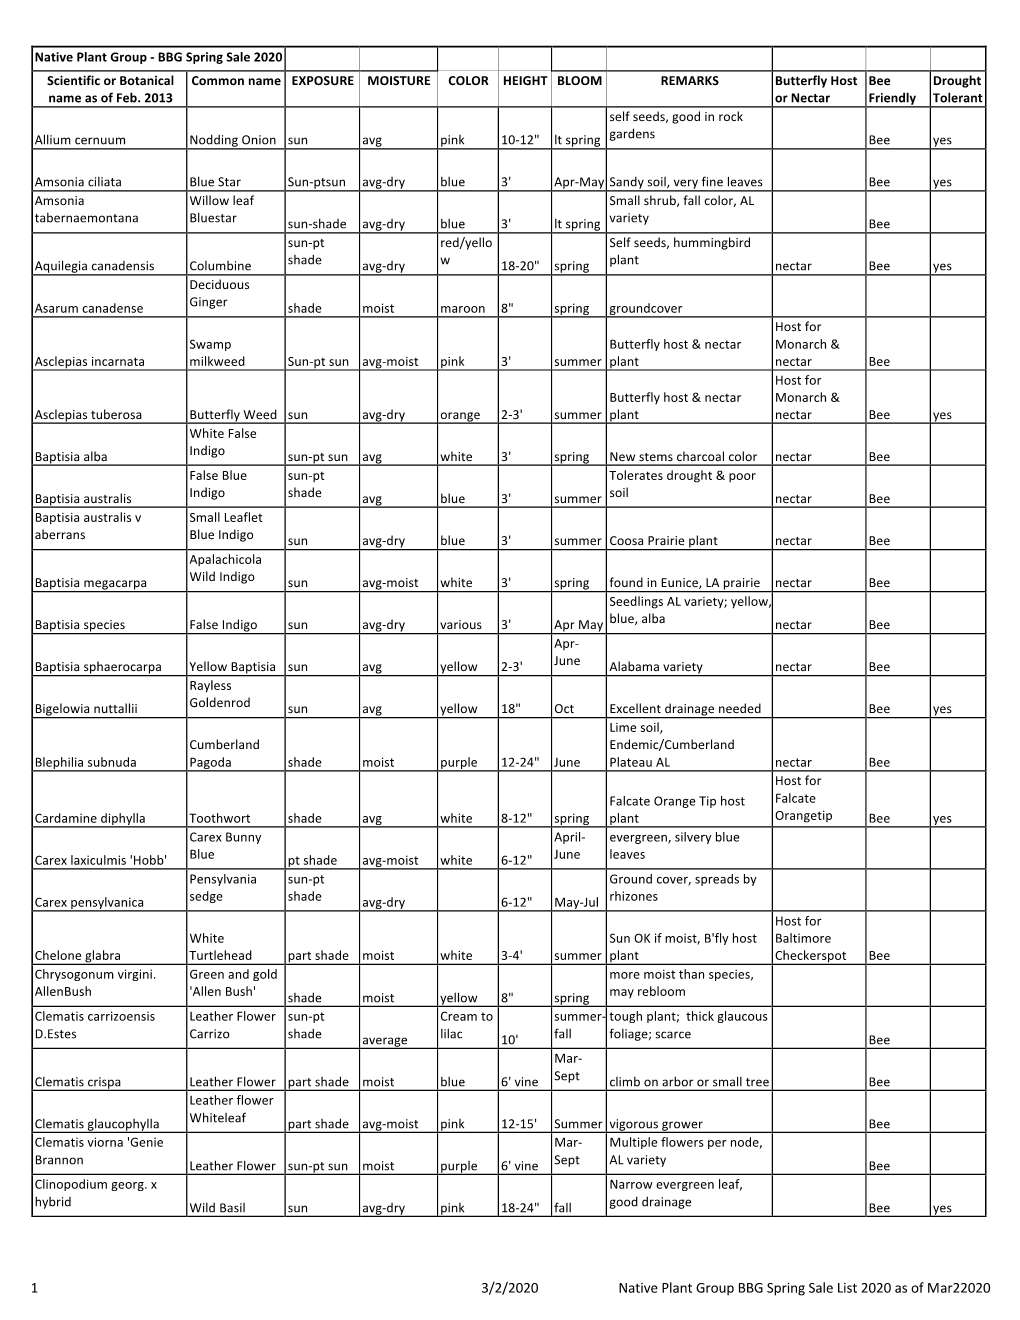 Native Plant Group BBG Spring Sale List 2020 As of Mar22020